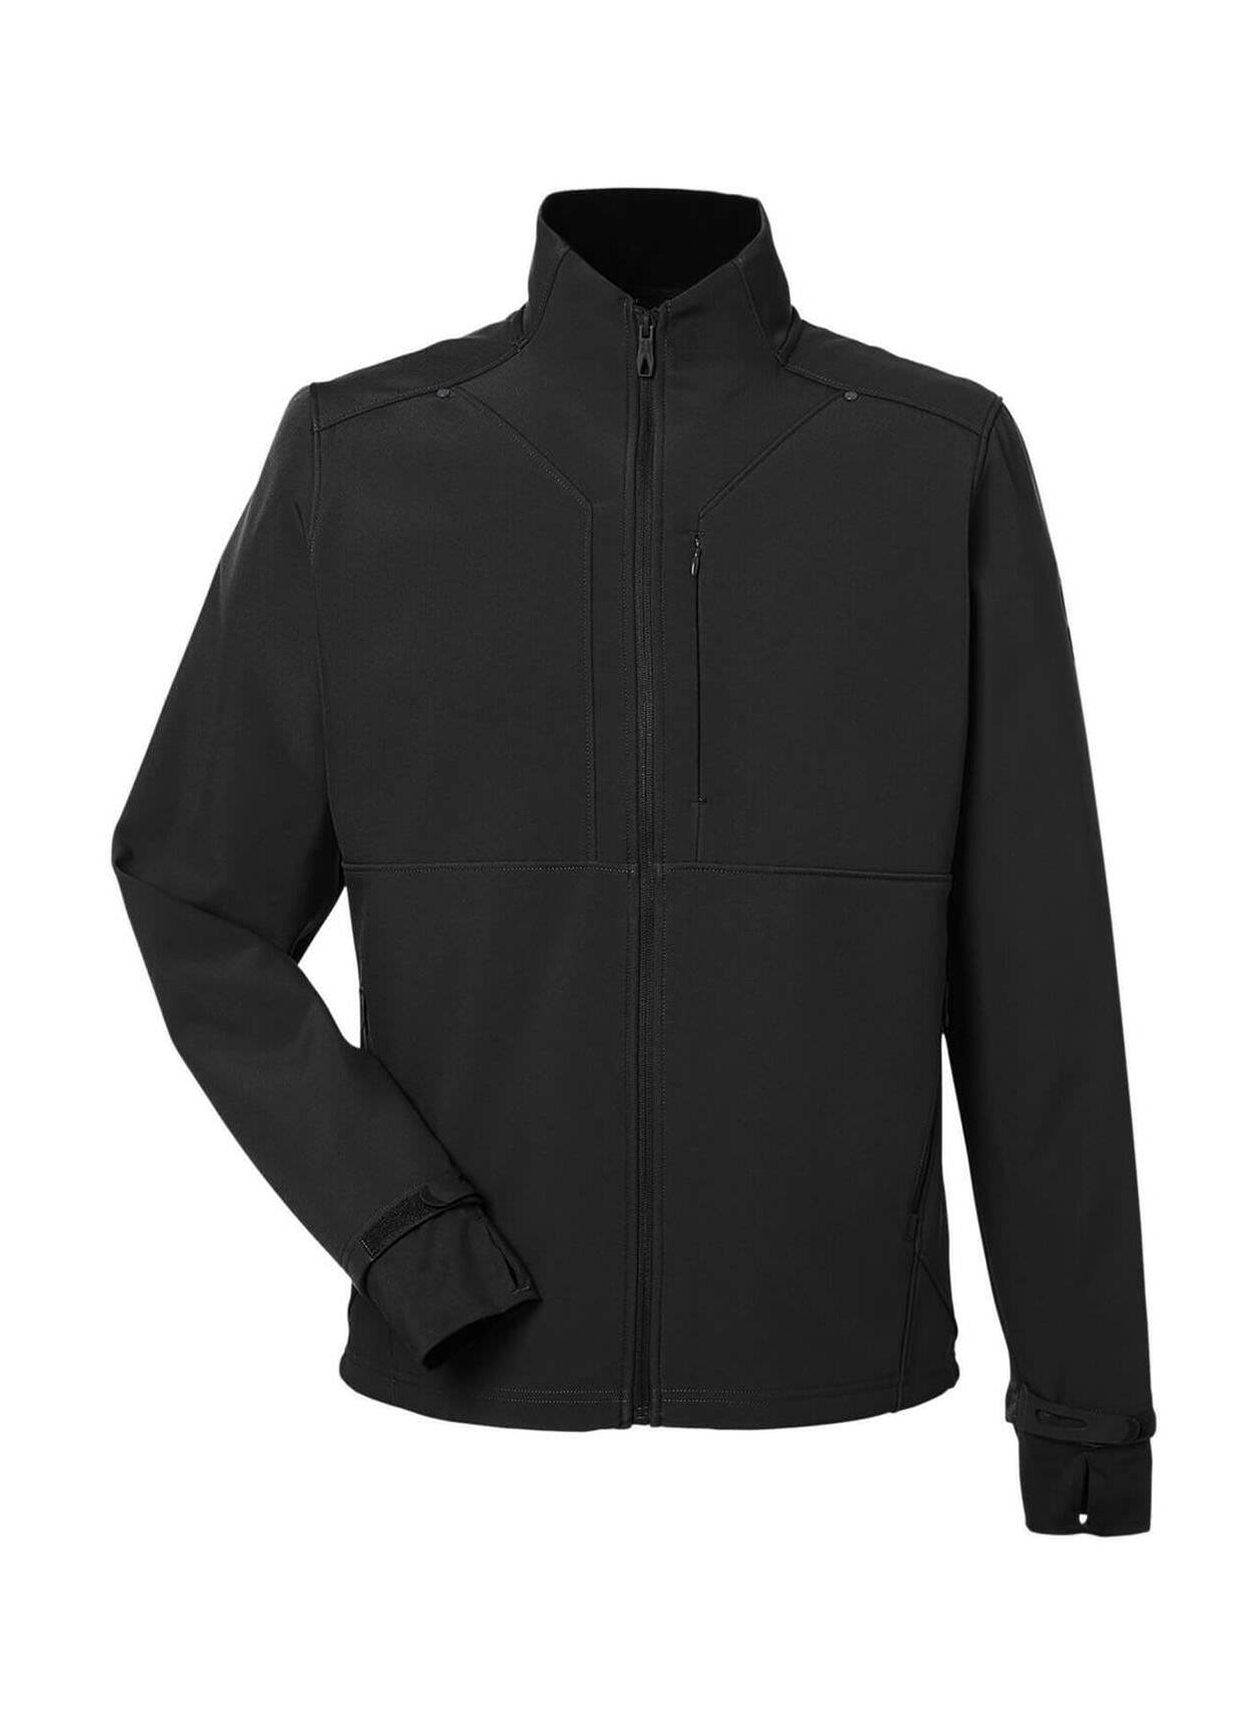 Corporate Spyder Men's Black Touring Jacket